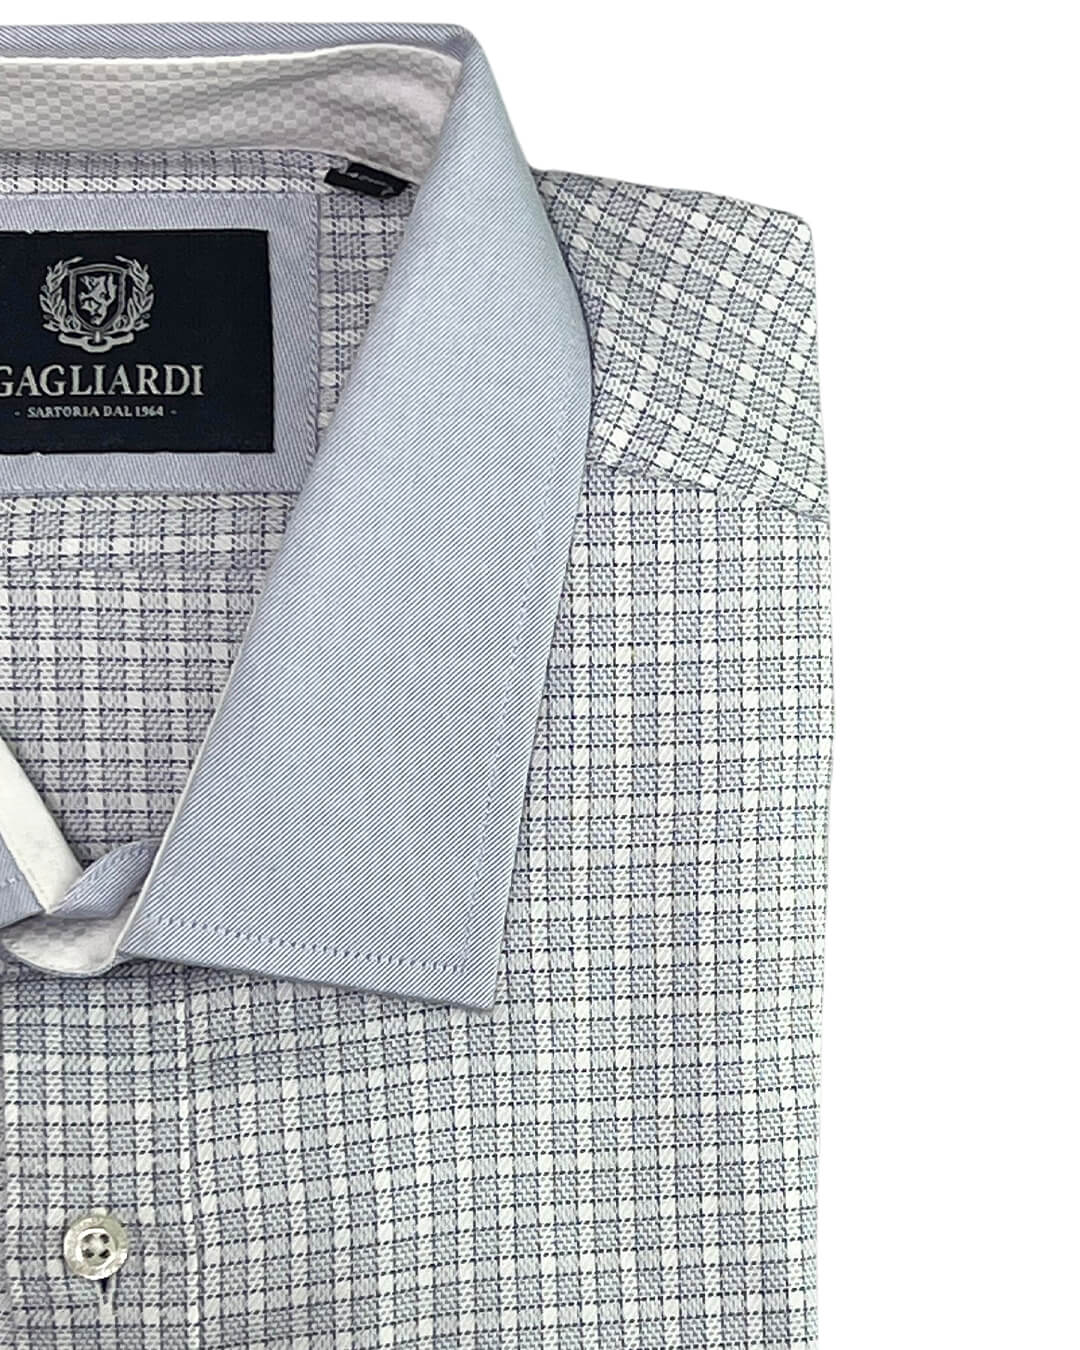 Gagliardi Shirts Sky Blue Check Contrast Collar